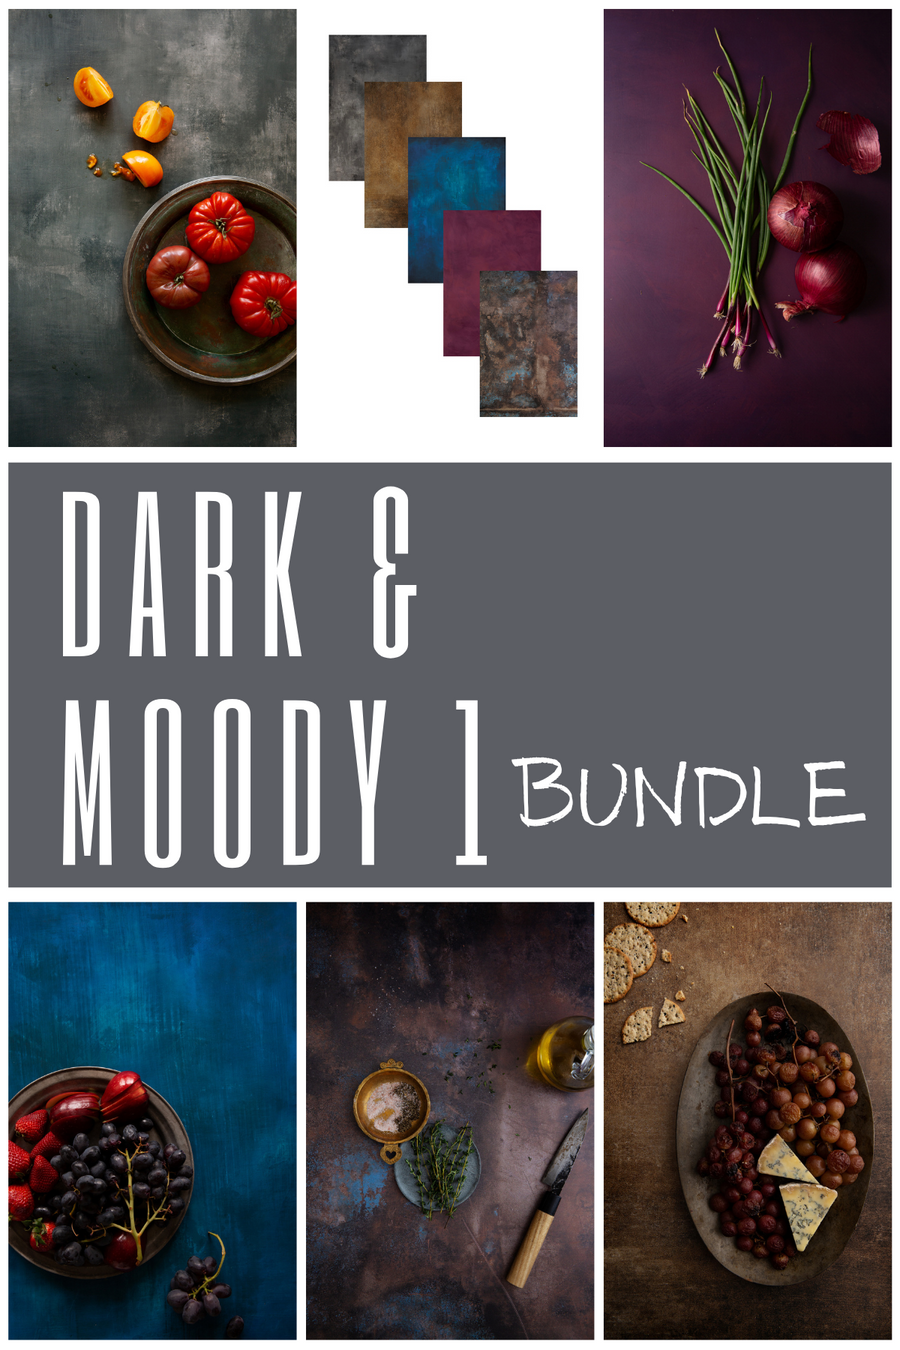 Dark & Moody #1 Bundle